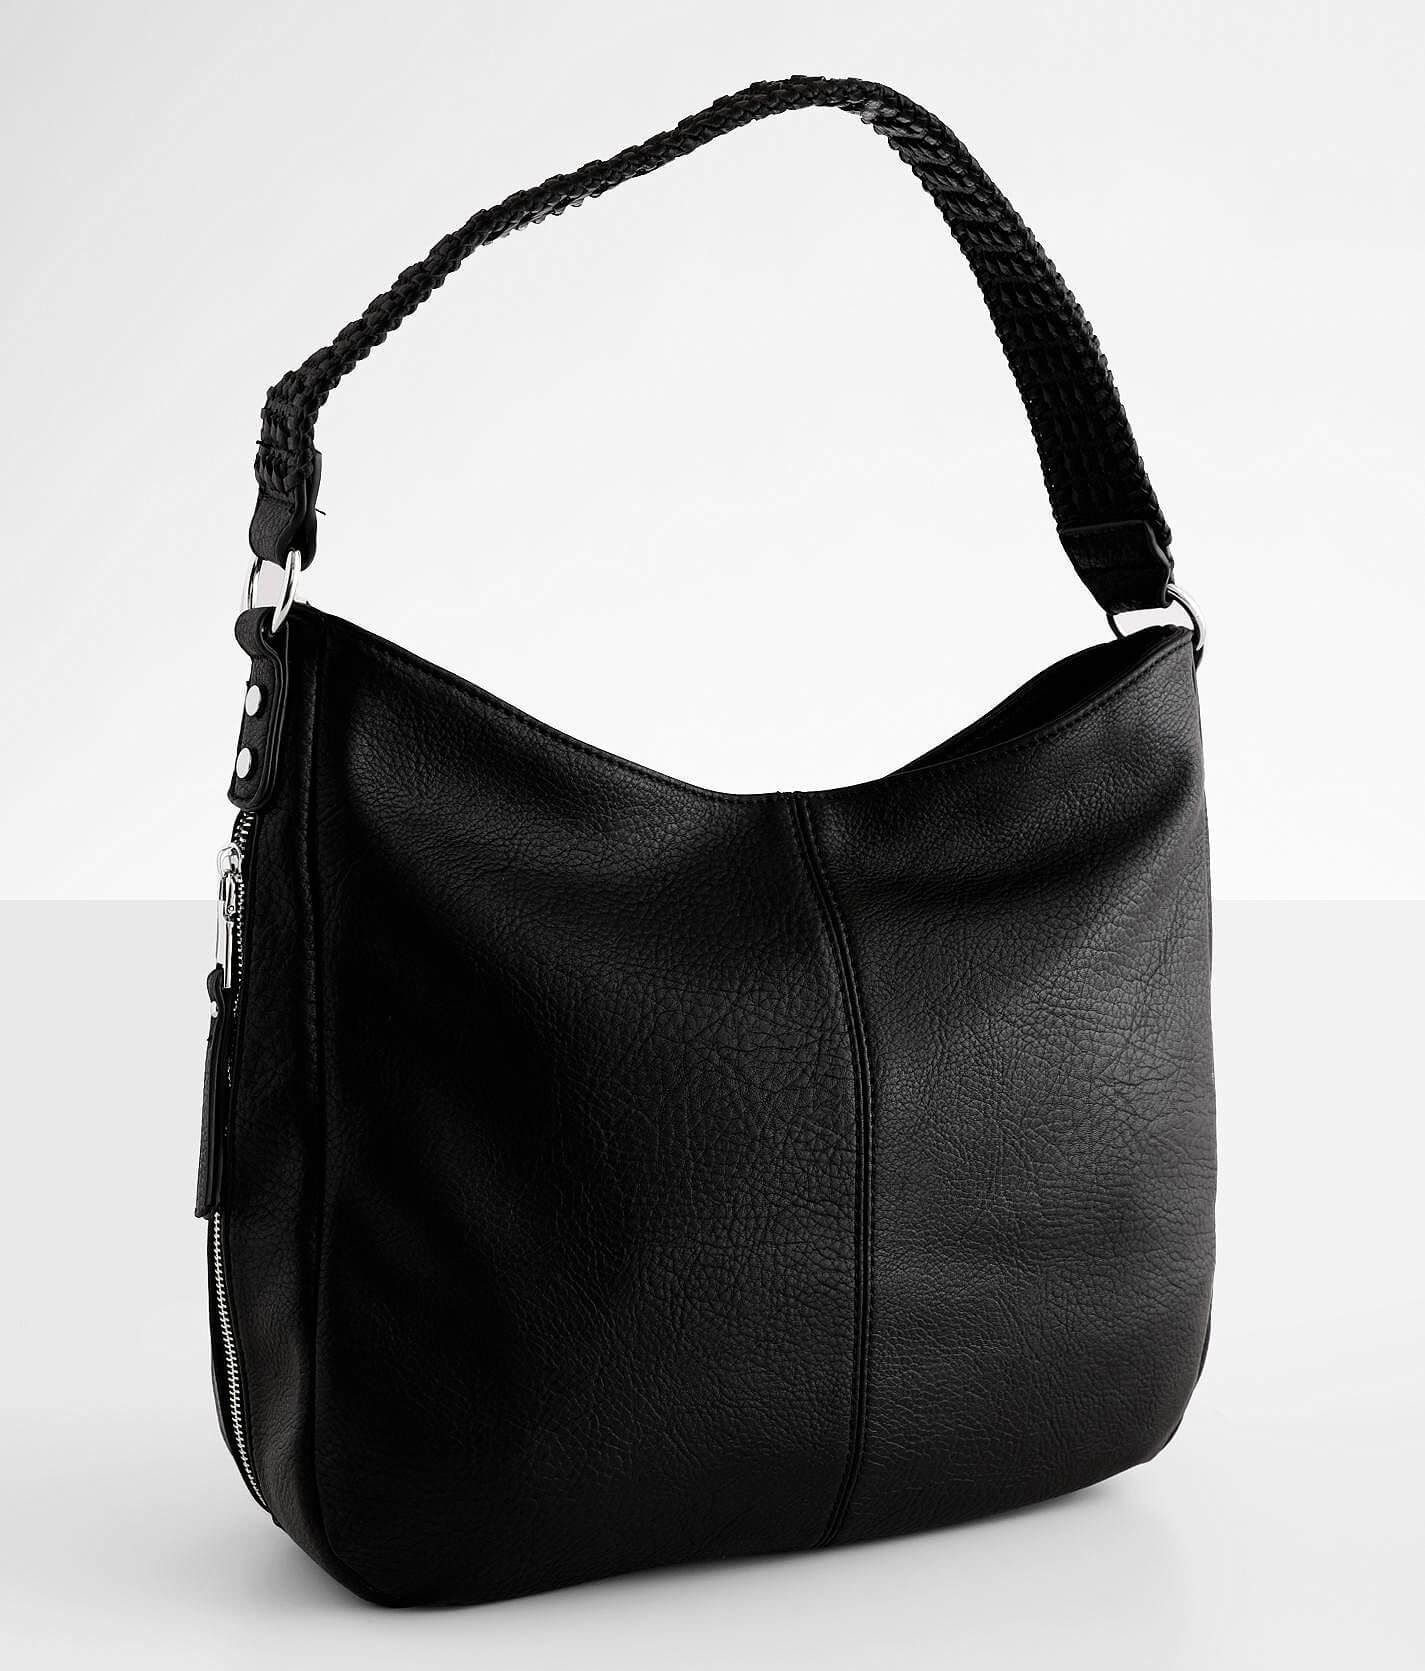 Sasha + Sofi Women Black Satchel Handbag. New With Tag.